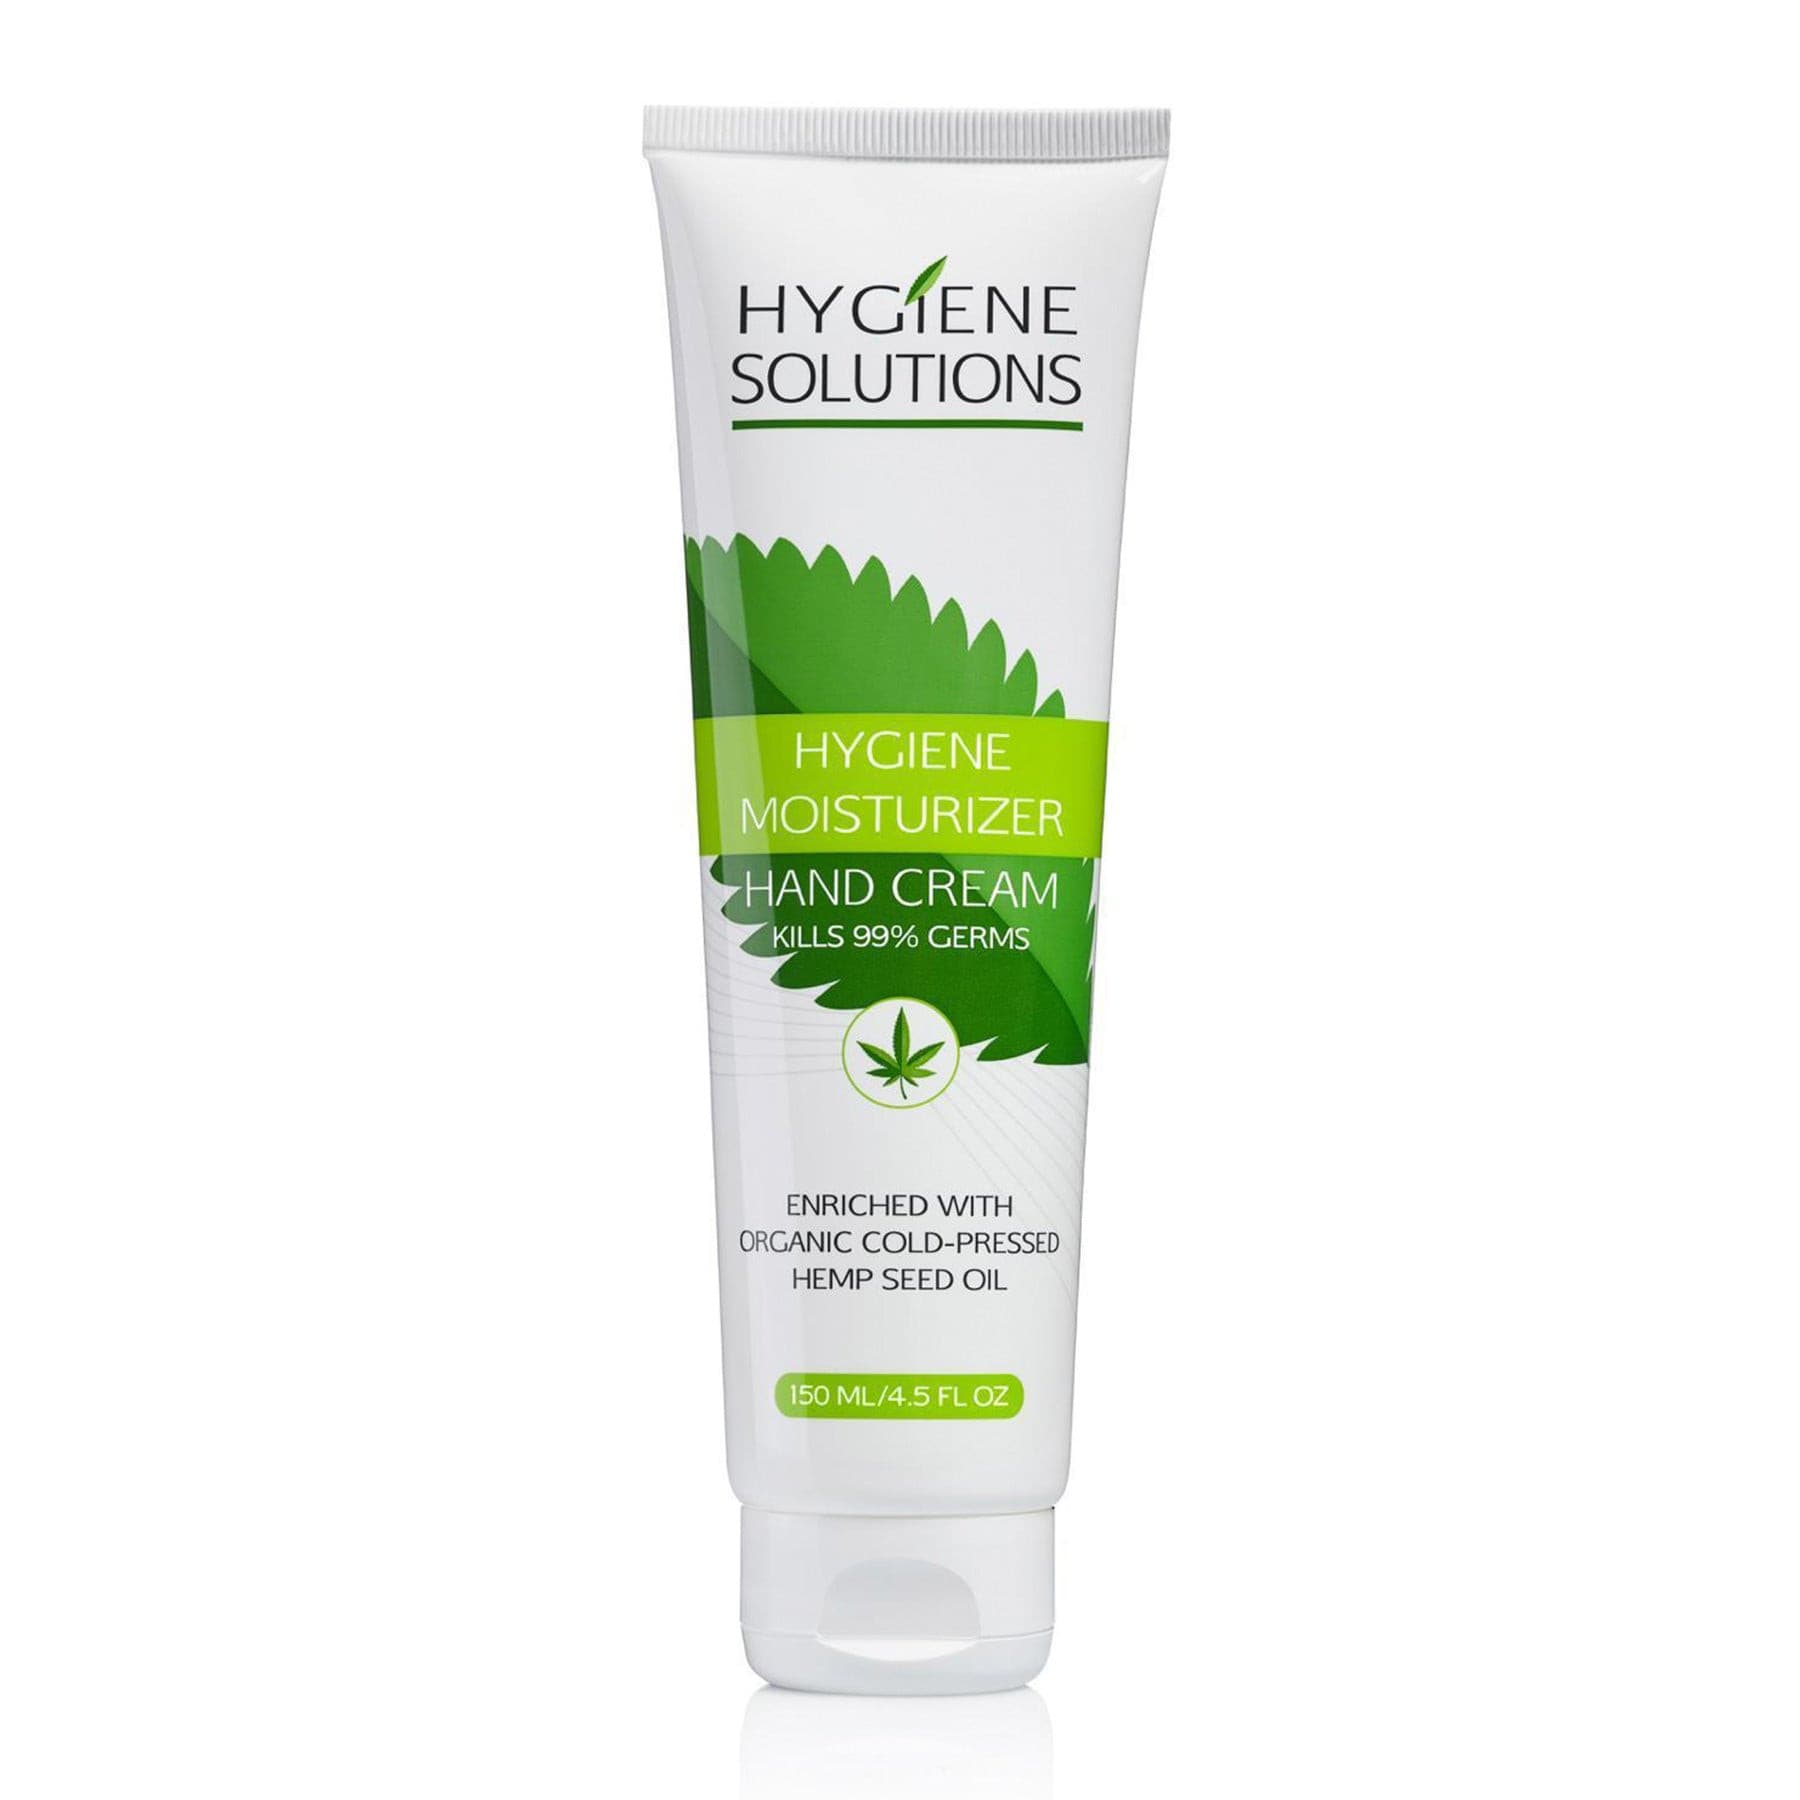 Hygiene Solutions Hand Cream